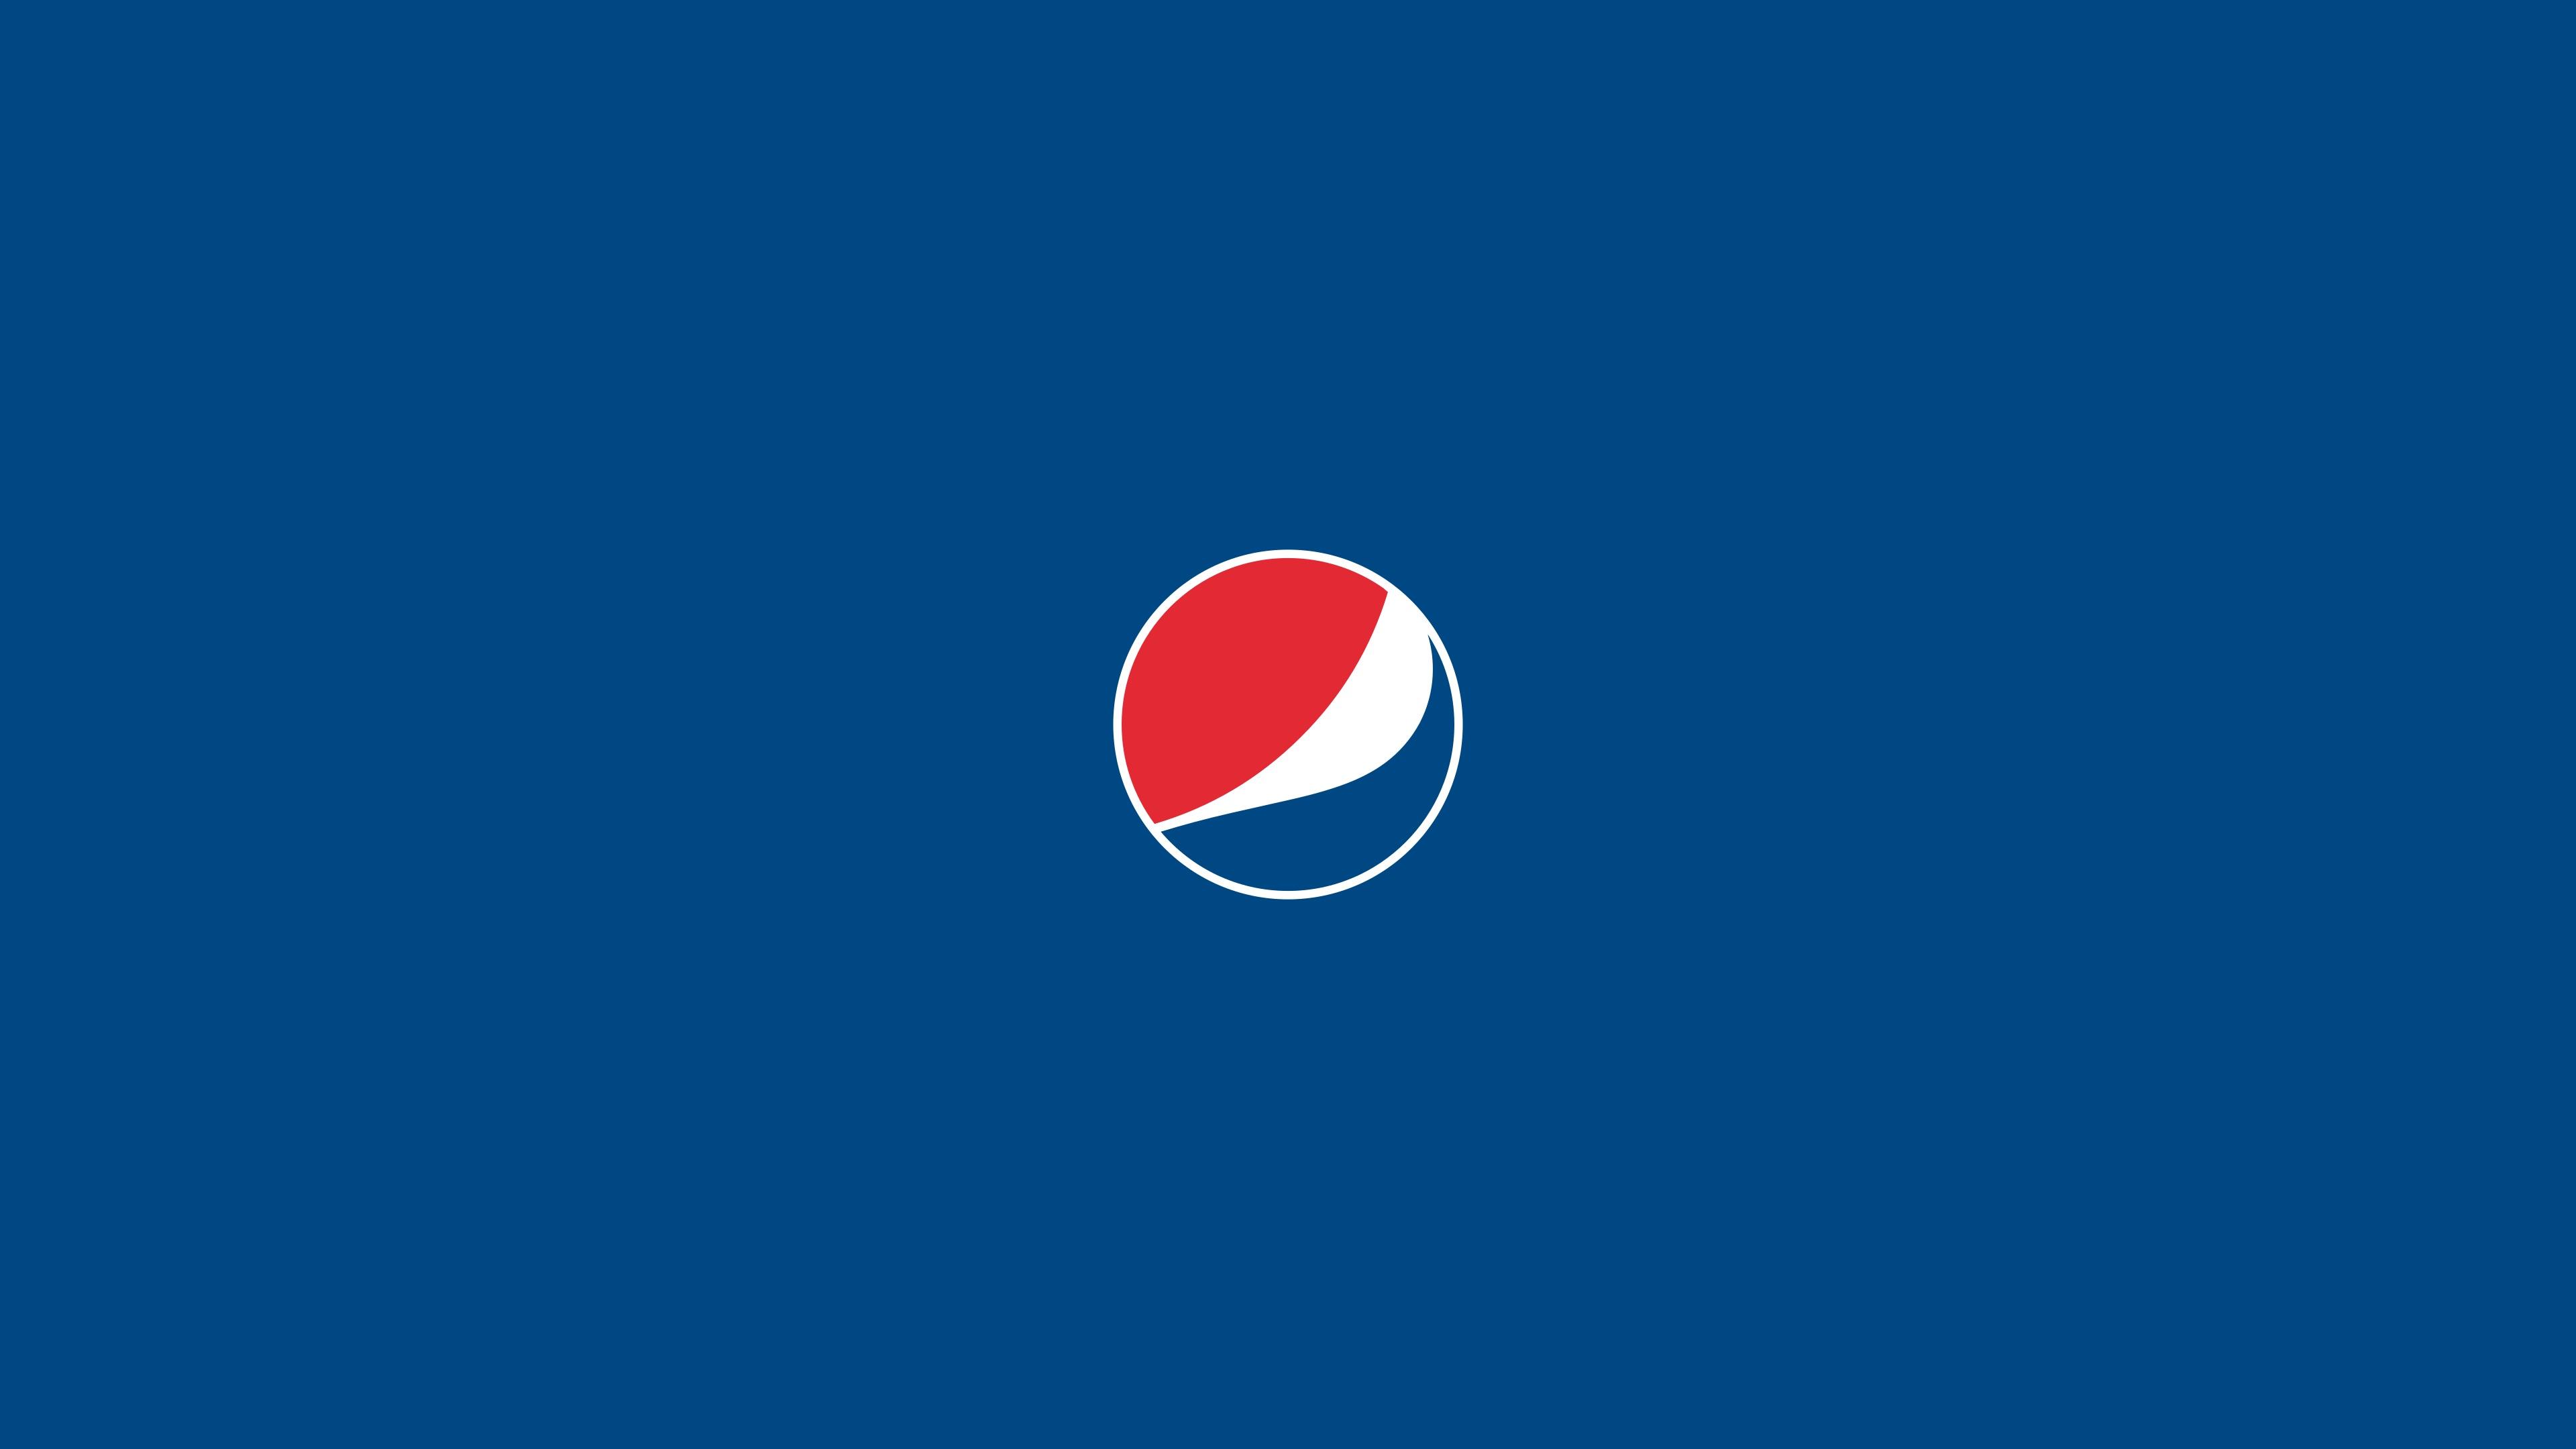 HD wallpaper, Blue Background, 4K, Cola, Minimalism, Beverages, Brand, Simple Background, Logo, Pepsi